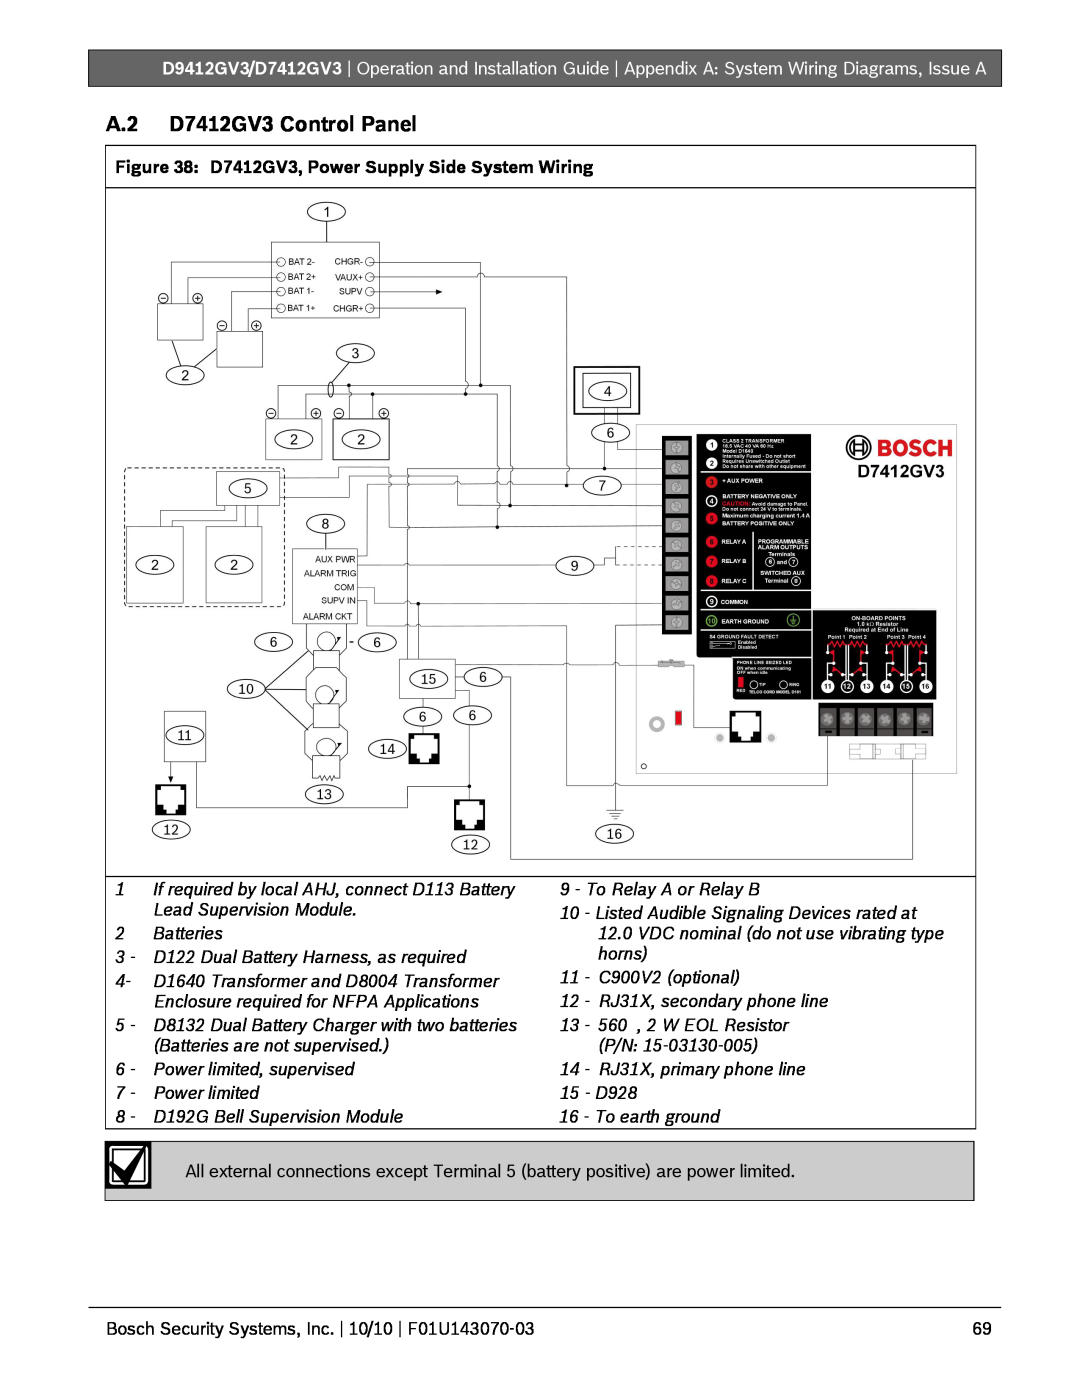 Bosch Appliances D9412GV3 manual A.2 D7412GV3 Control Panel 